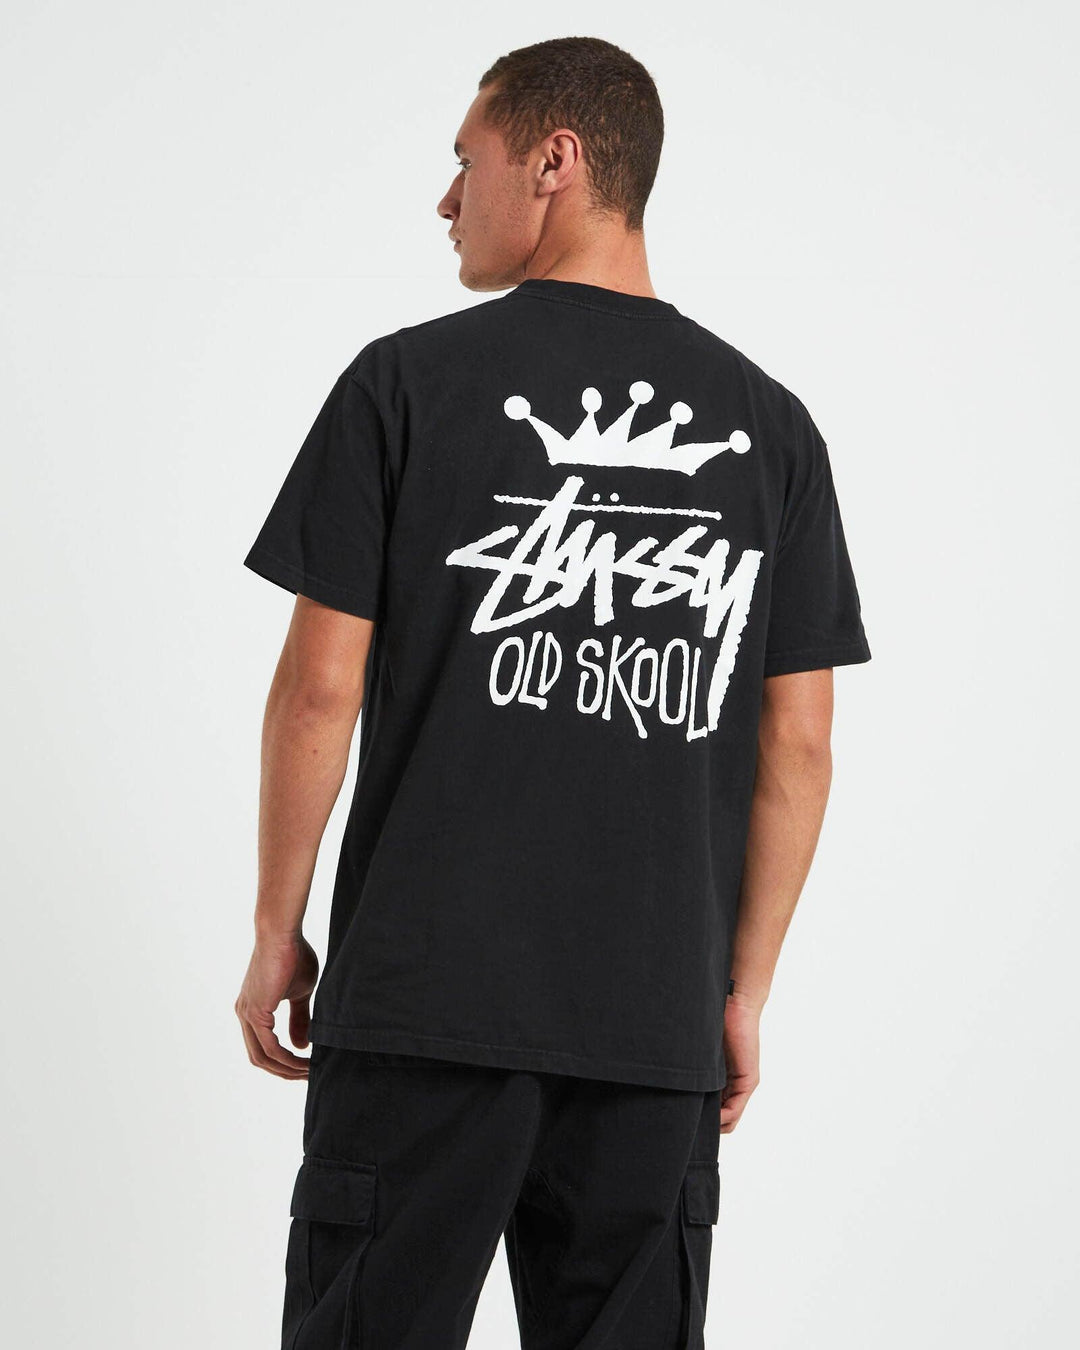 Stussy Heavyweight T-Shirt "Old Skool" (Black) - COP IT AU